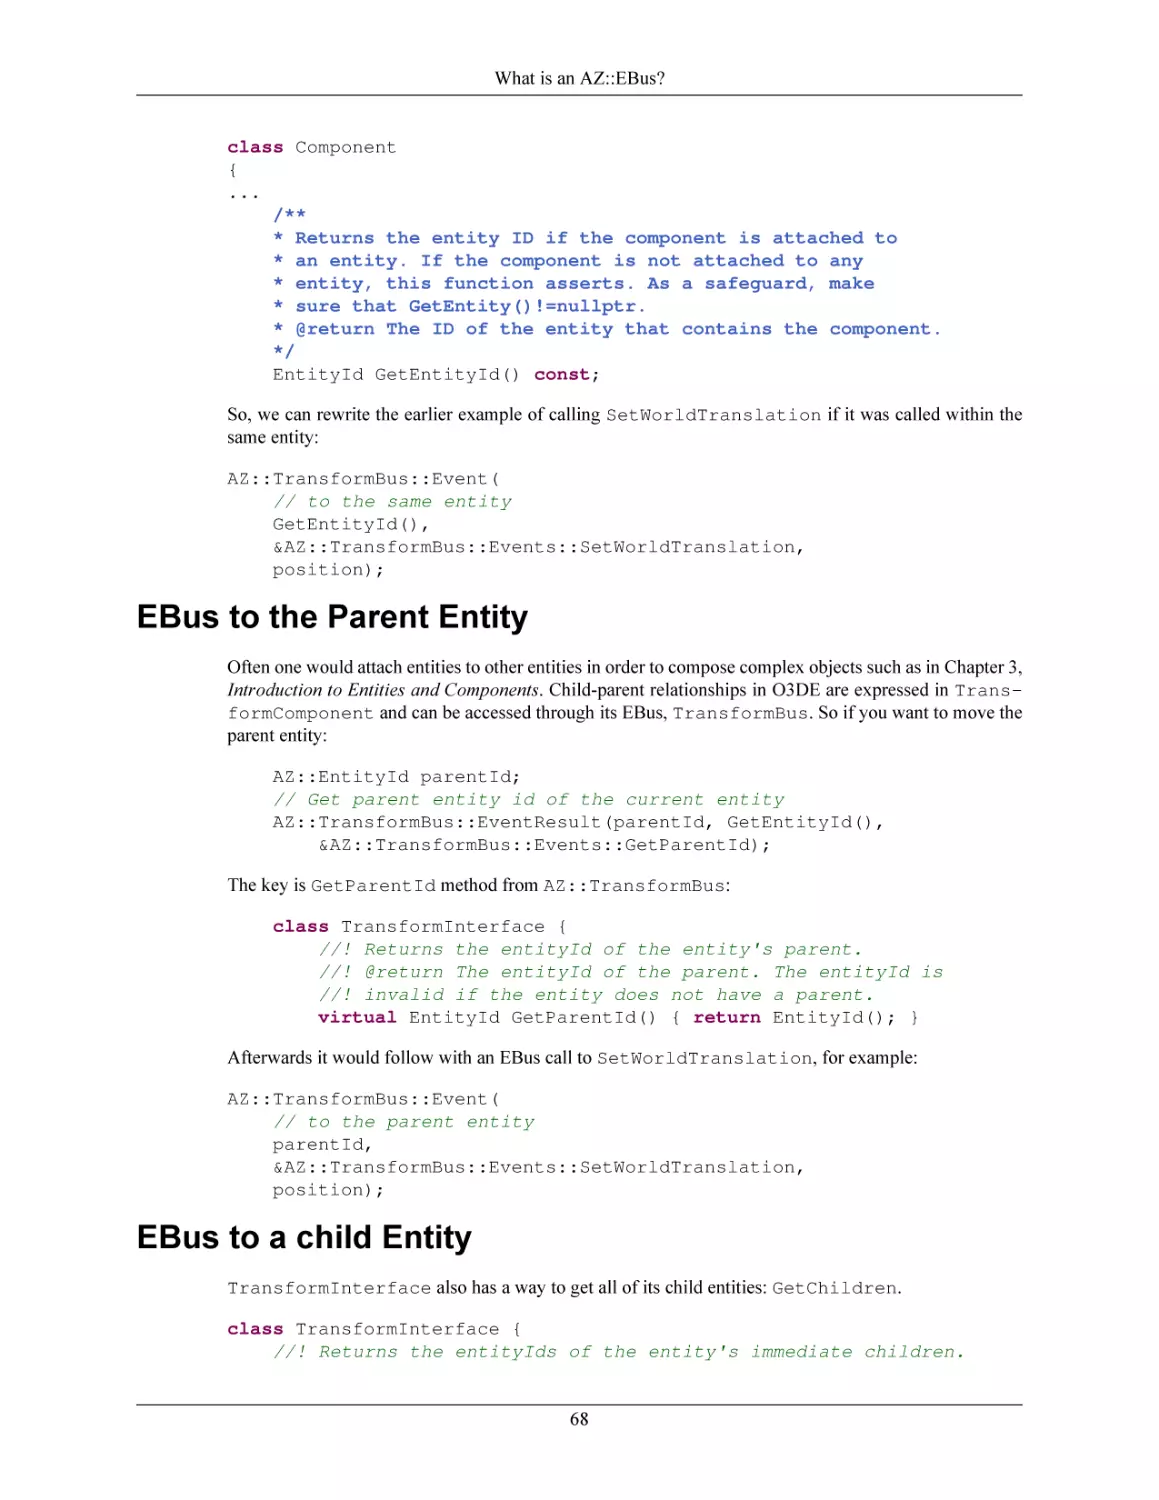 EBus to the Parent Entity
EBus to a child Entity